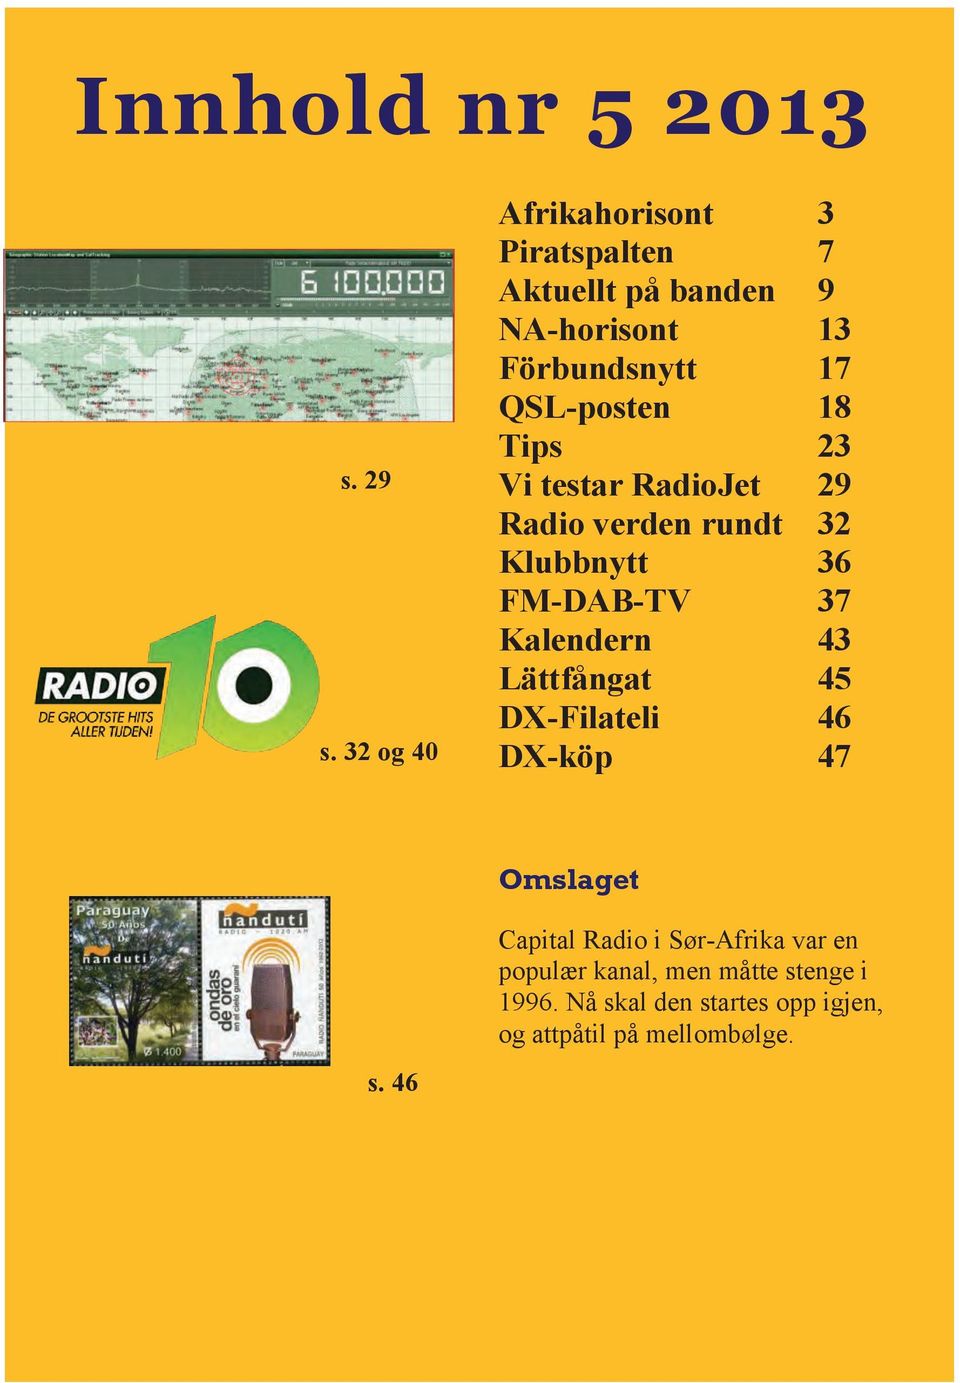 QSL-posten 18 Tips 23 Vi testar RadioJet 29 Radio verden rundt 32 Klubbnytt 36 FM-DAB-TV 37 Kalendern